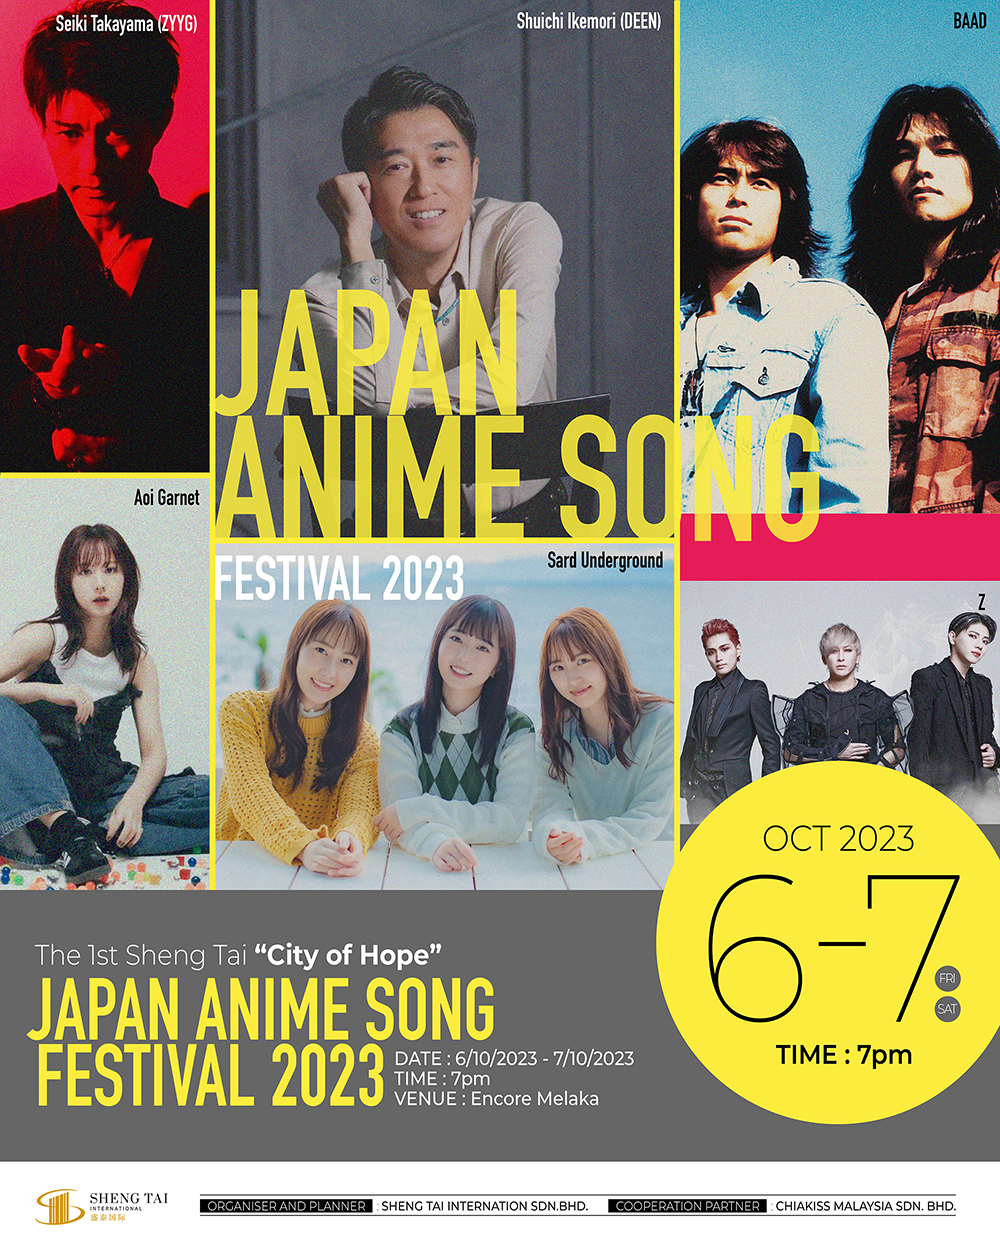 The 1st Sheng Tai “City of Hope” Japan Anime Song Festival 2023